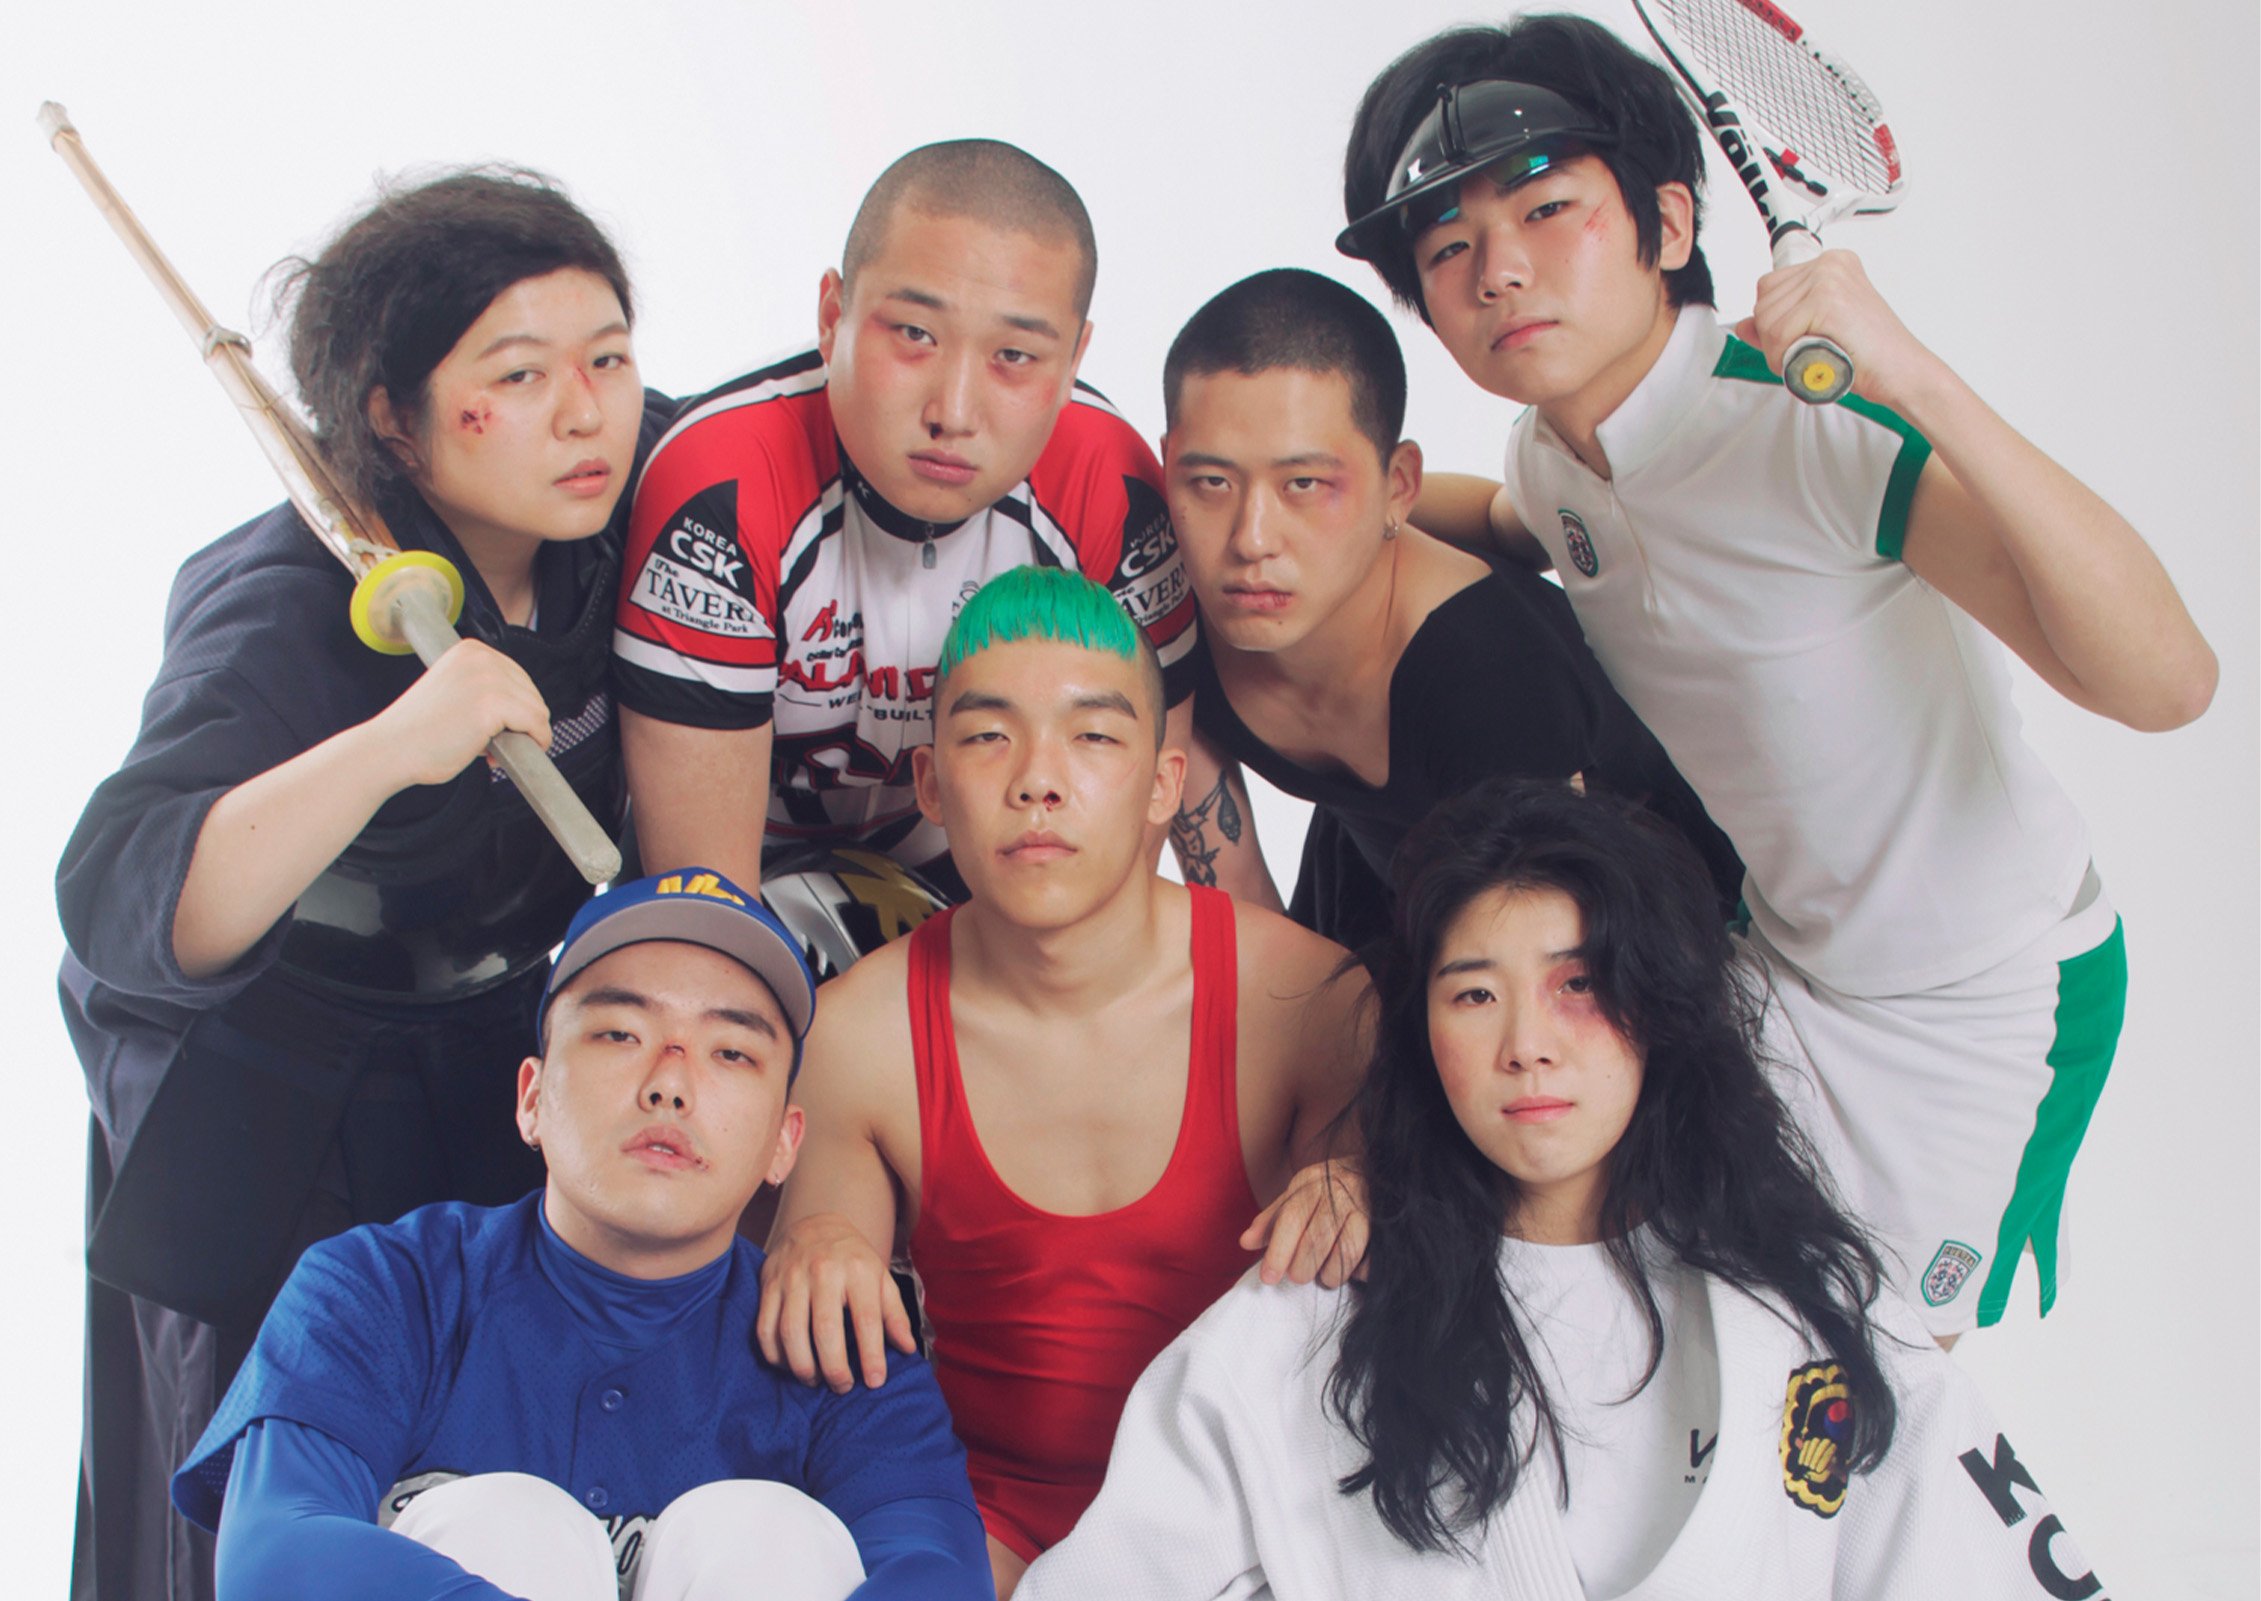 balming tiger Alternative south korean music kpop hiphop sabukaru seoul upcoming underrated underground artist indie band rock.jpg